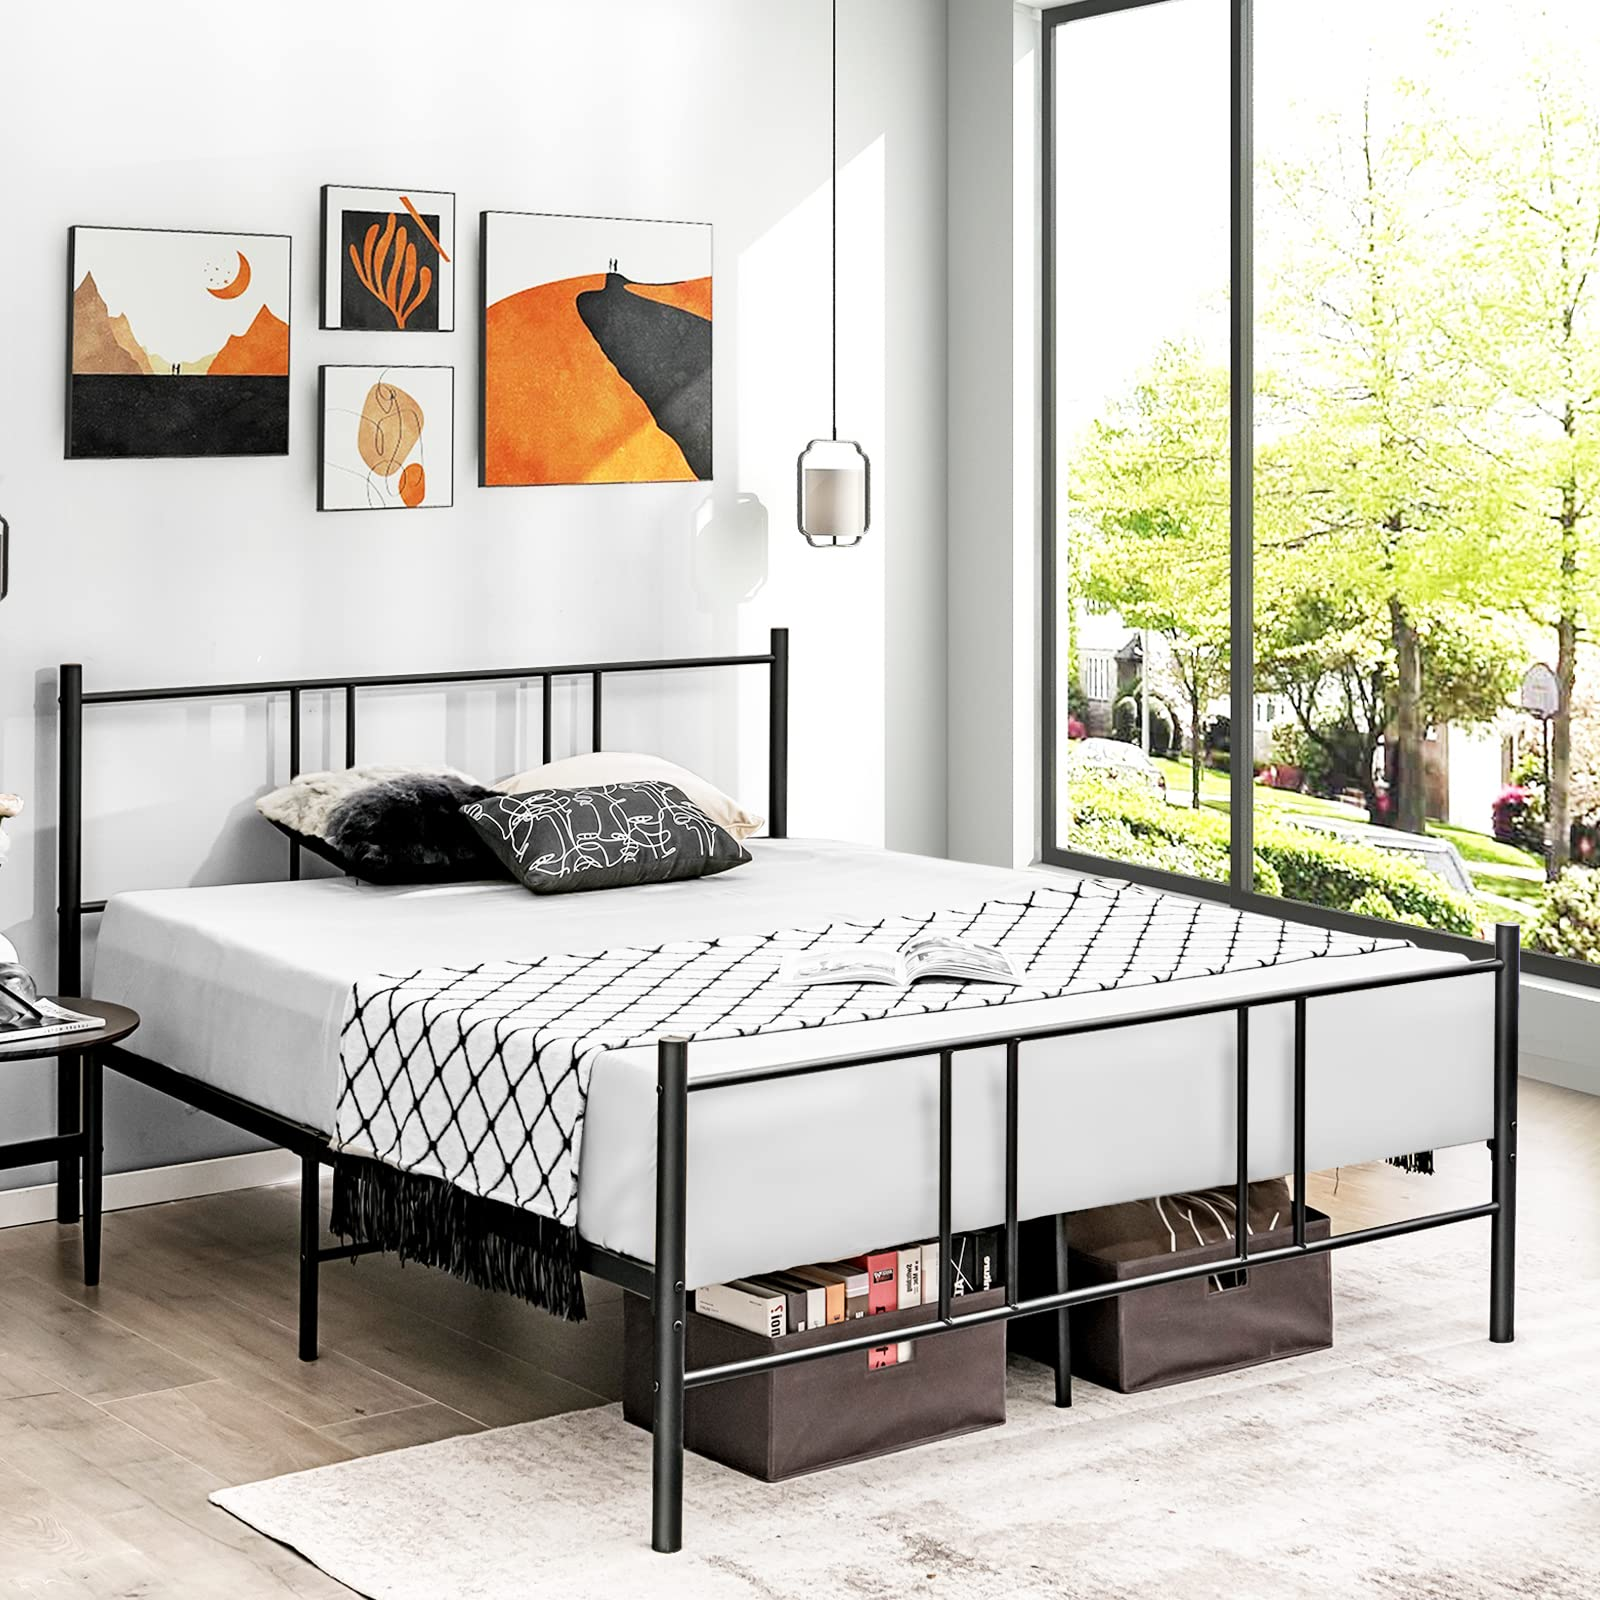 Giantex Full Size Platform Bed Frame